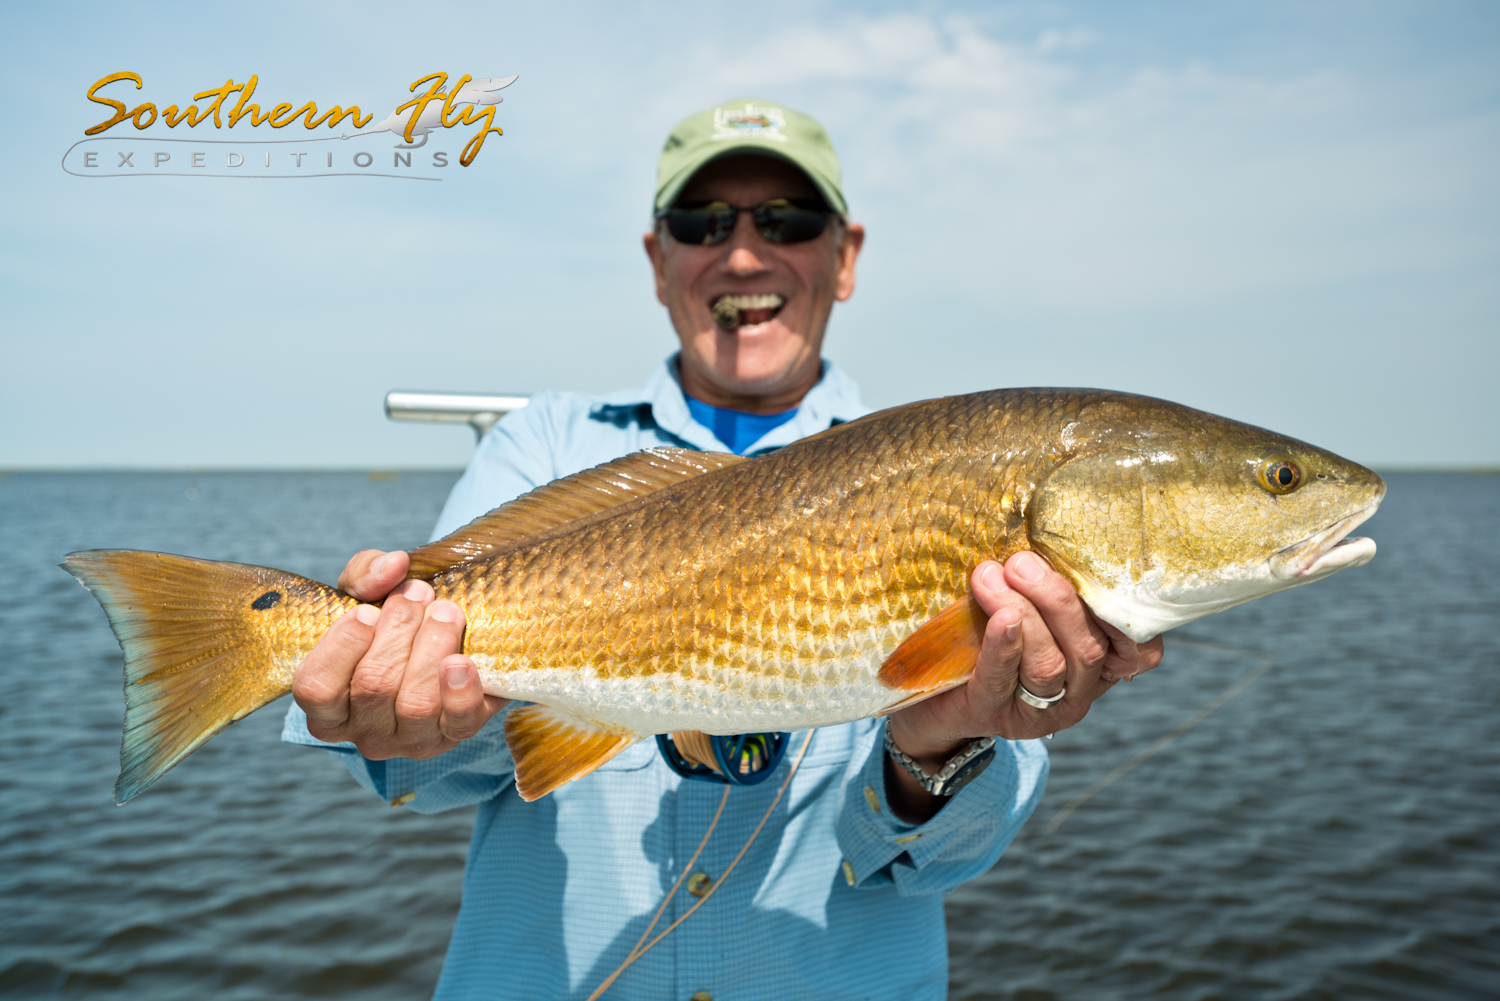 Fly fishing for redfish in Louisiana